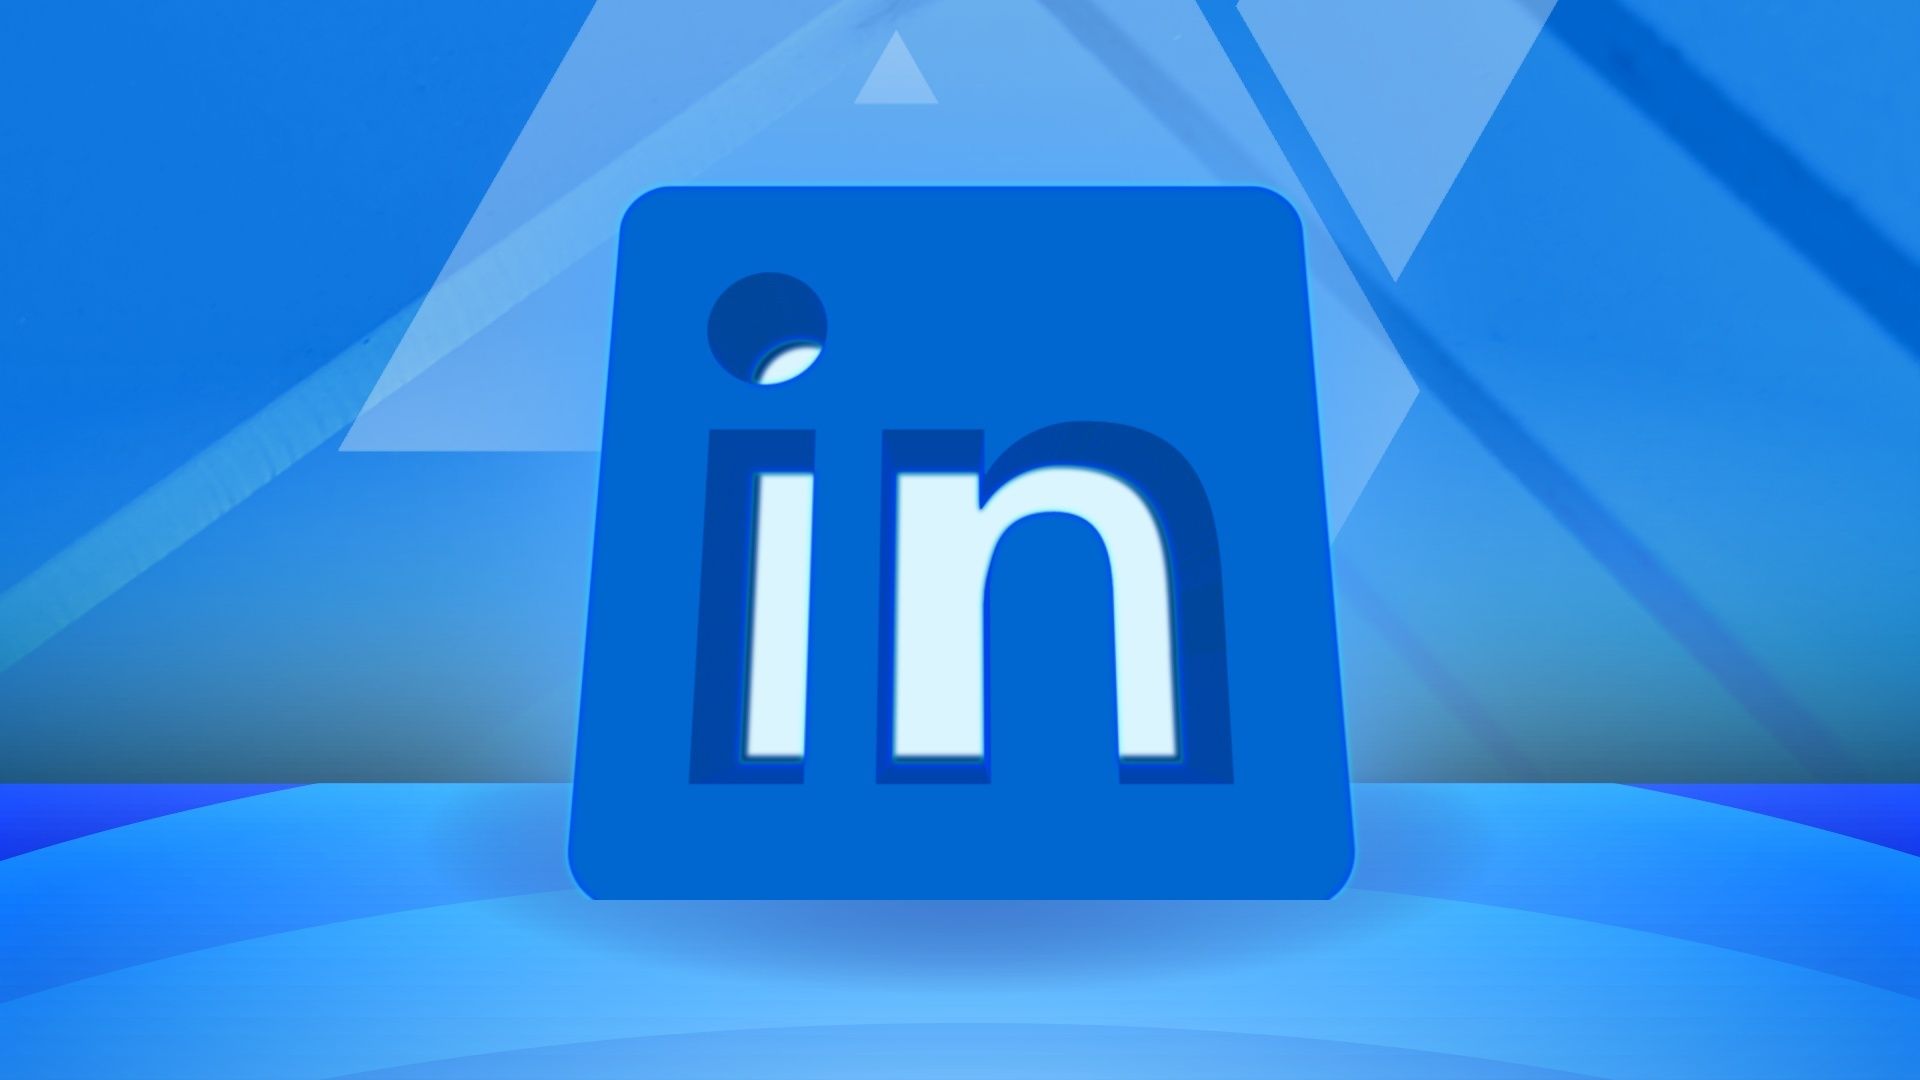 LinkedIn logo set on a blue backdrop with AP logo